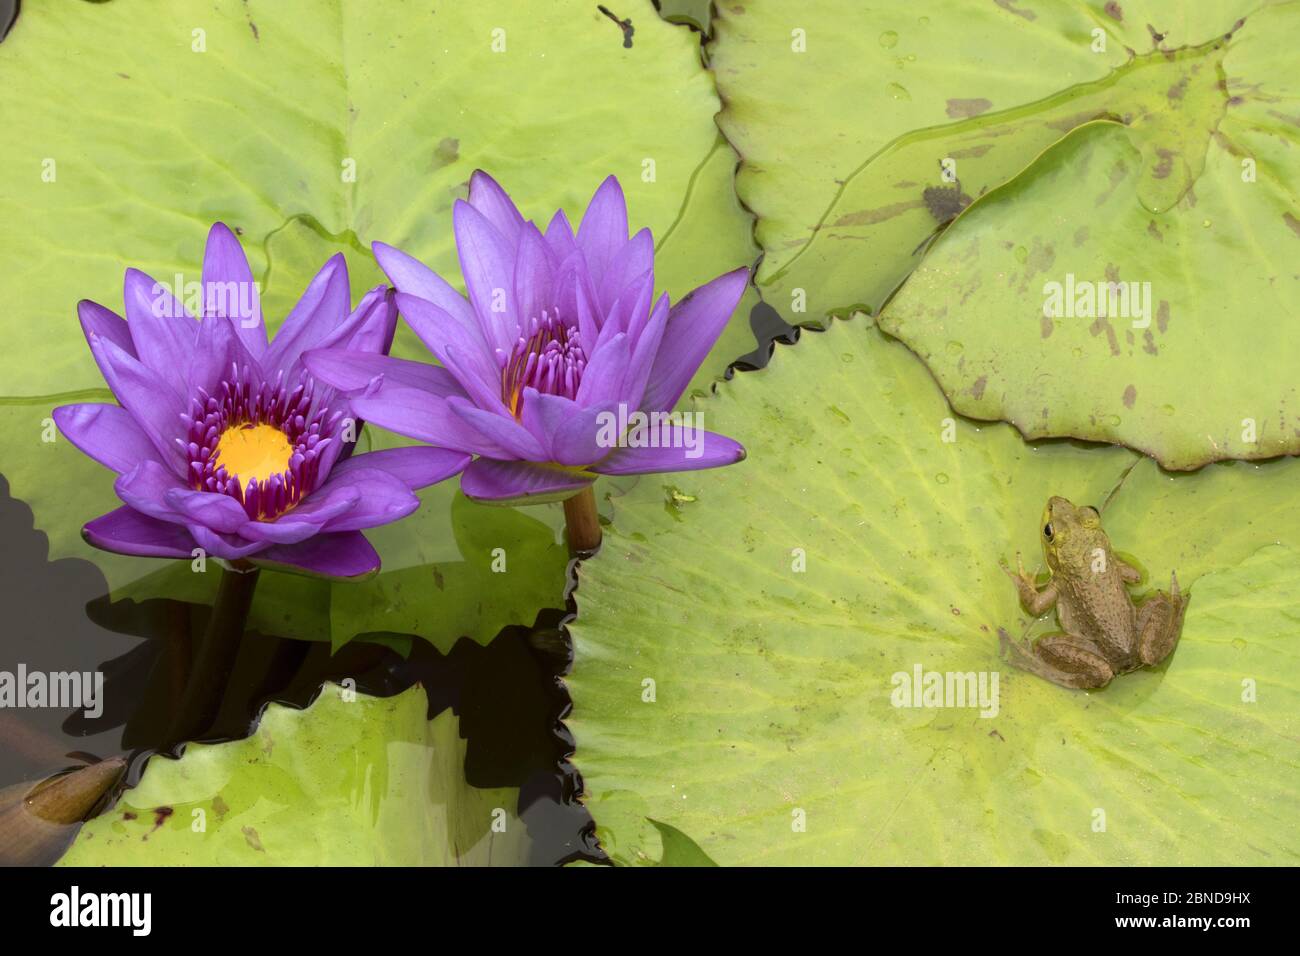 American bullfrog (Lithobates catesbeianus) next to Water lily flowers, Washington DC, USA, July. Stock Photo